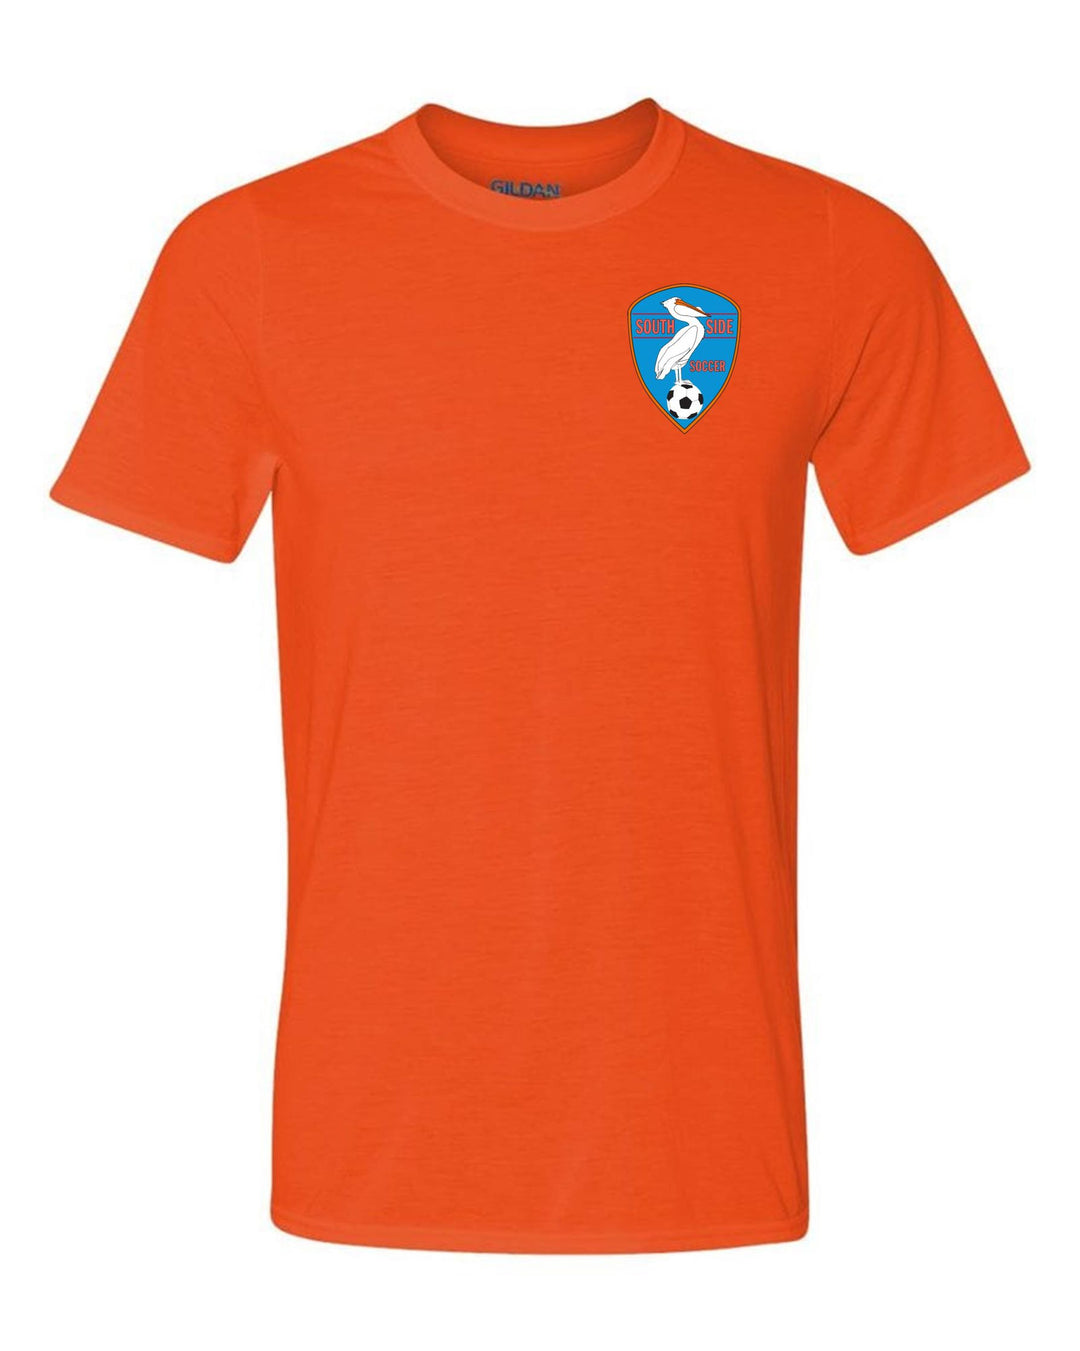 Southside Youth Soccer Short Sleeve T-Shirt SYS Spiritwear ORANGE WOMENS MEDIUM - Third Coast Soccer